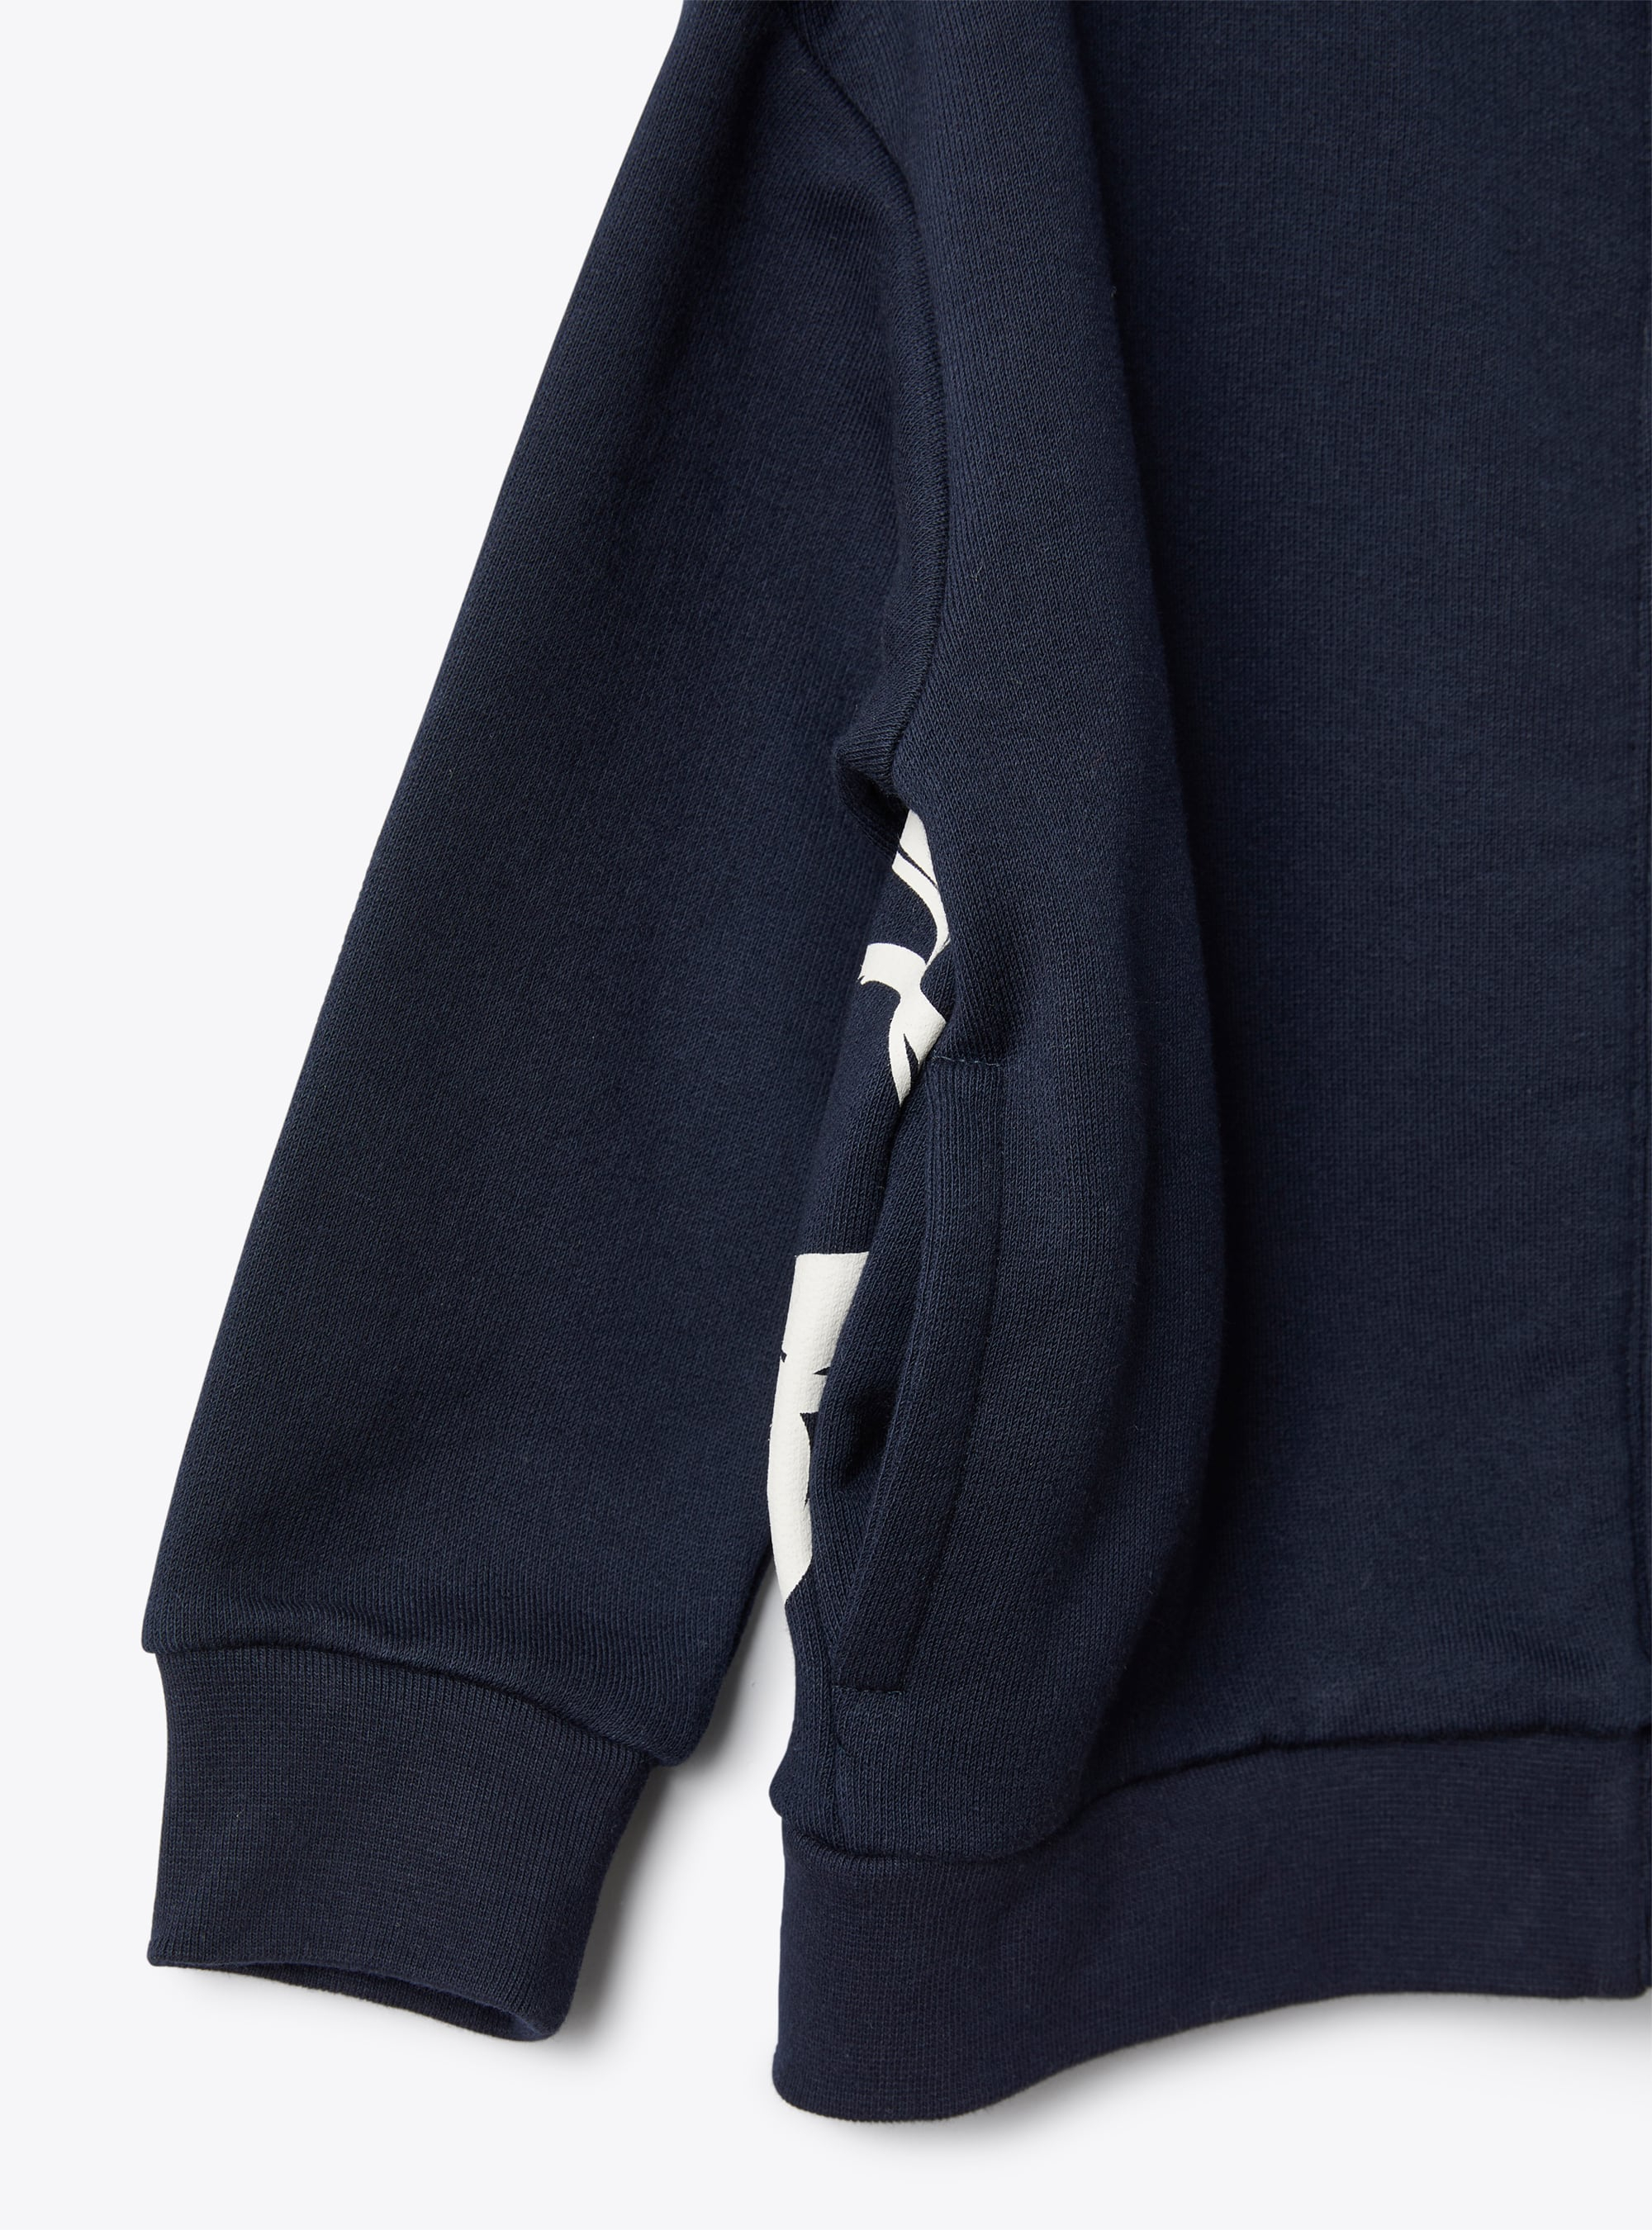 Zip-front fleece jacket in blue with Vespa print detail - Blue | Il Gufo